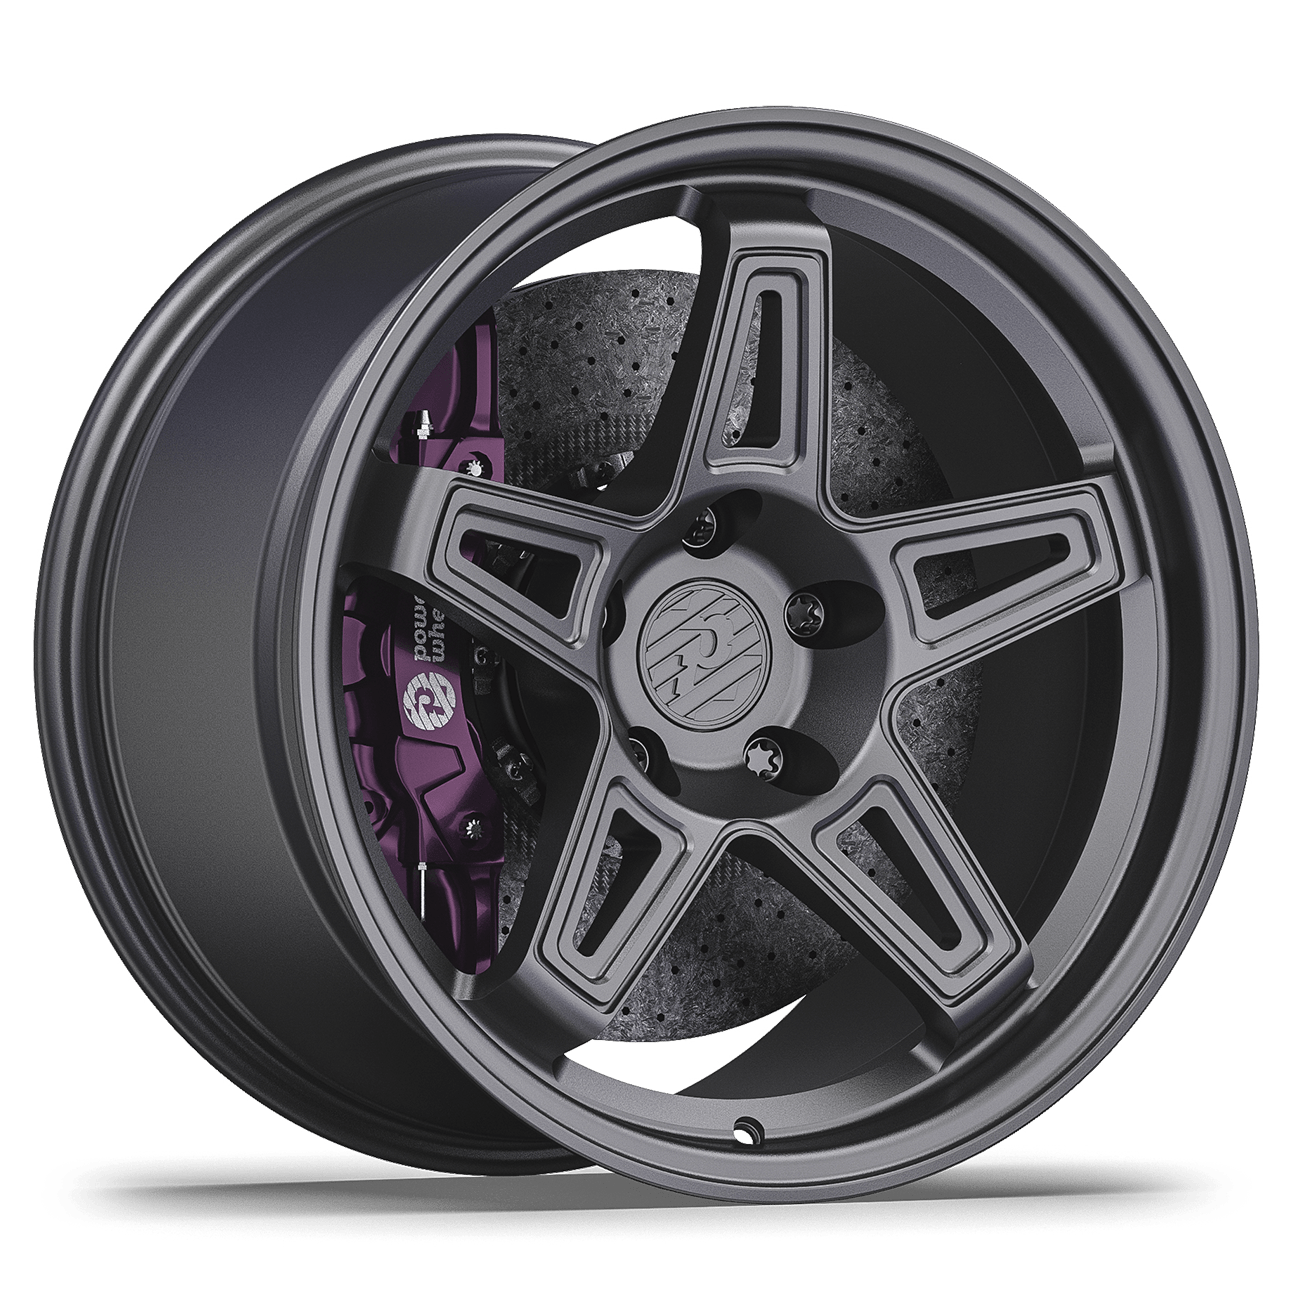 Пауэр диски. Диски Motorsport Racing Wheel BB-57. Power Wheels ms024 диски. SSR Wheels ms3. Zumbo Wheels диски артикул 3s021.